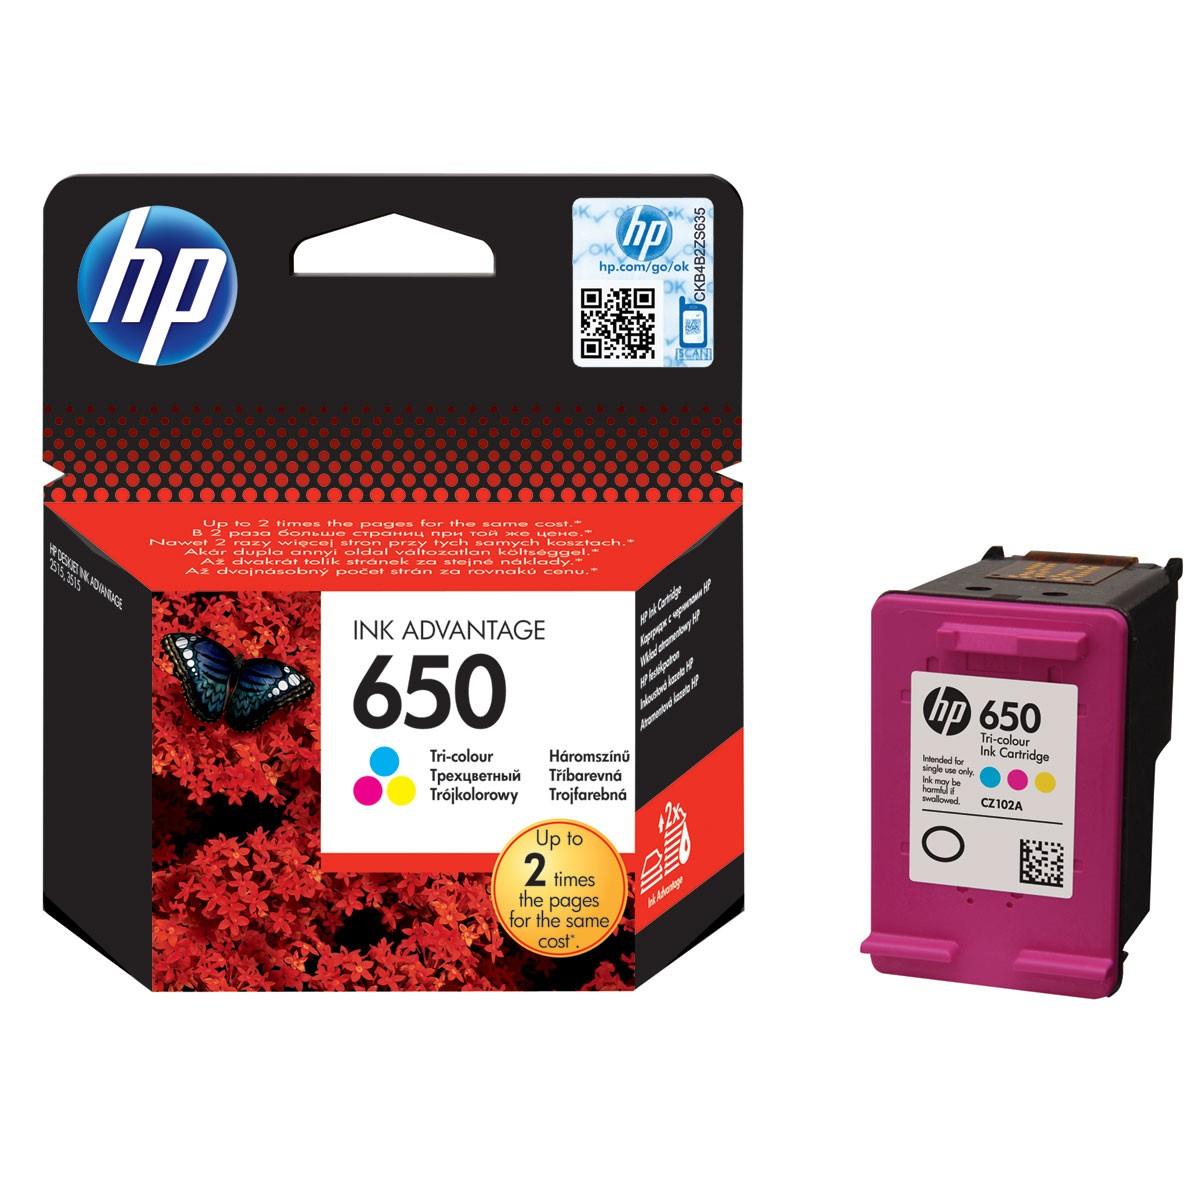 HP 650 (Prentar 200 síður) Tri-color Original Ink Advantage Cartridge (blátt, rautt, gult) fyrir Deskjet Ink Advantage 2515/1015/1515/2545/2645/3515/4645 prentara